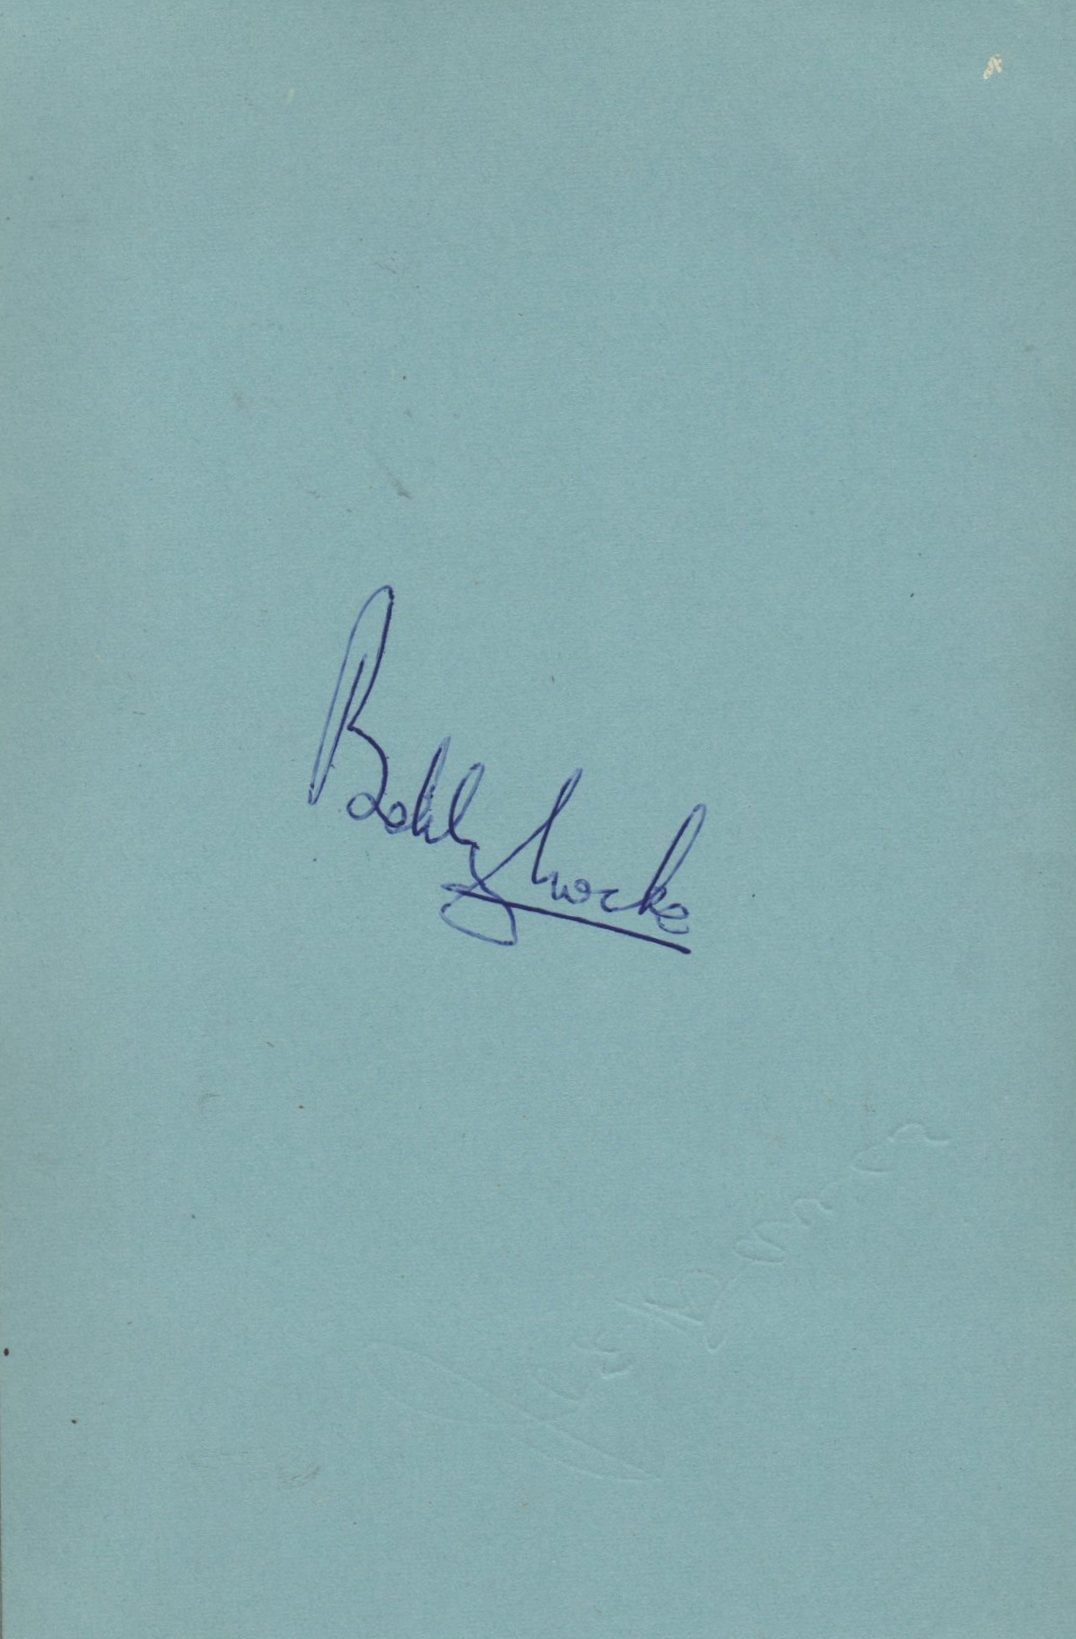 GOLF: An autograph album containing over